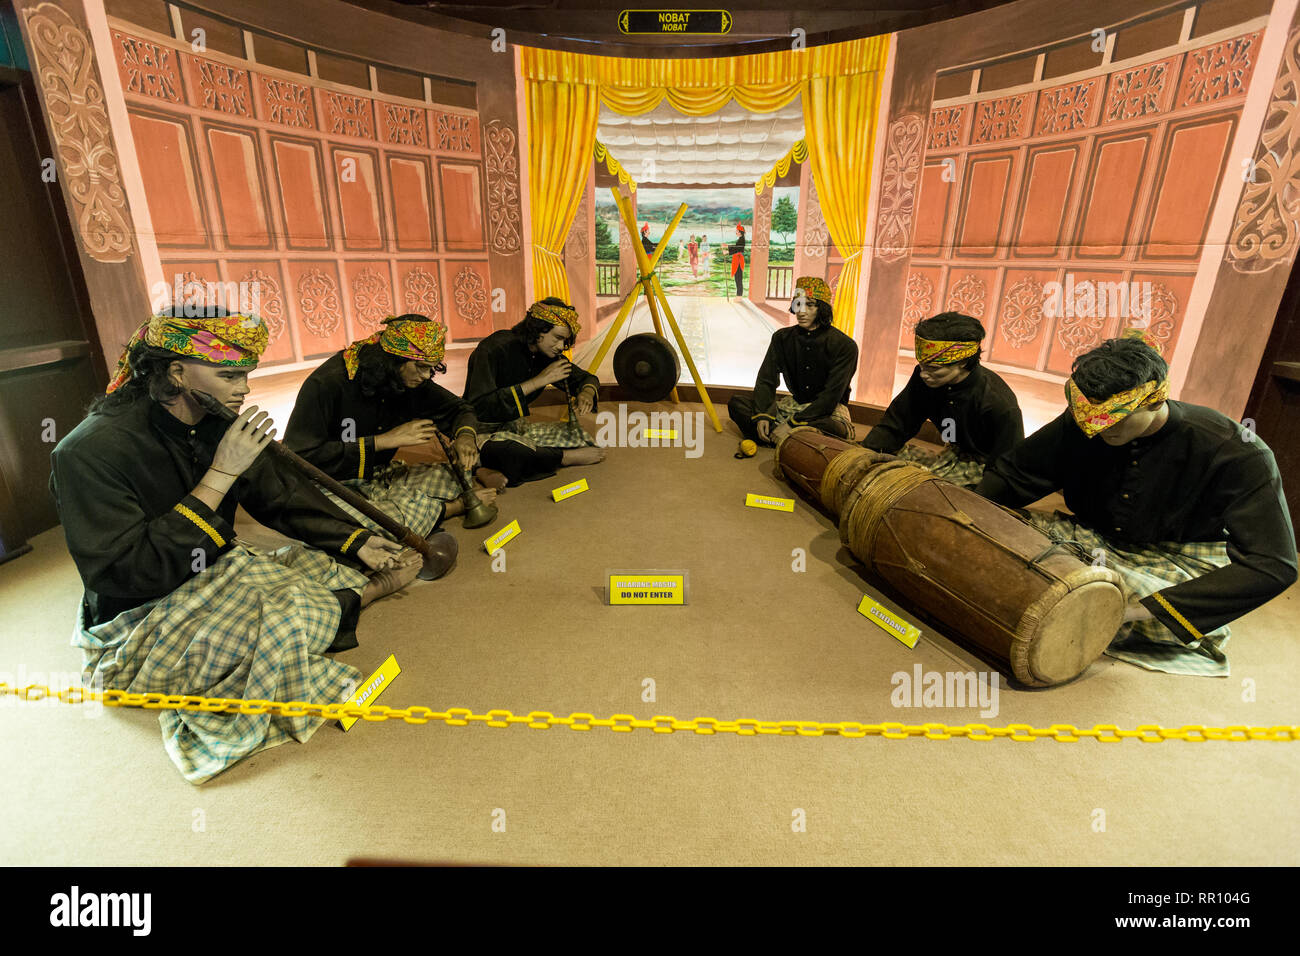 Ausstellung zeigt Gericht Musiker in das Sultan's Palace Museum, Istana Kesultanan, Melaka, Malaysia. Stockfoto